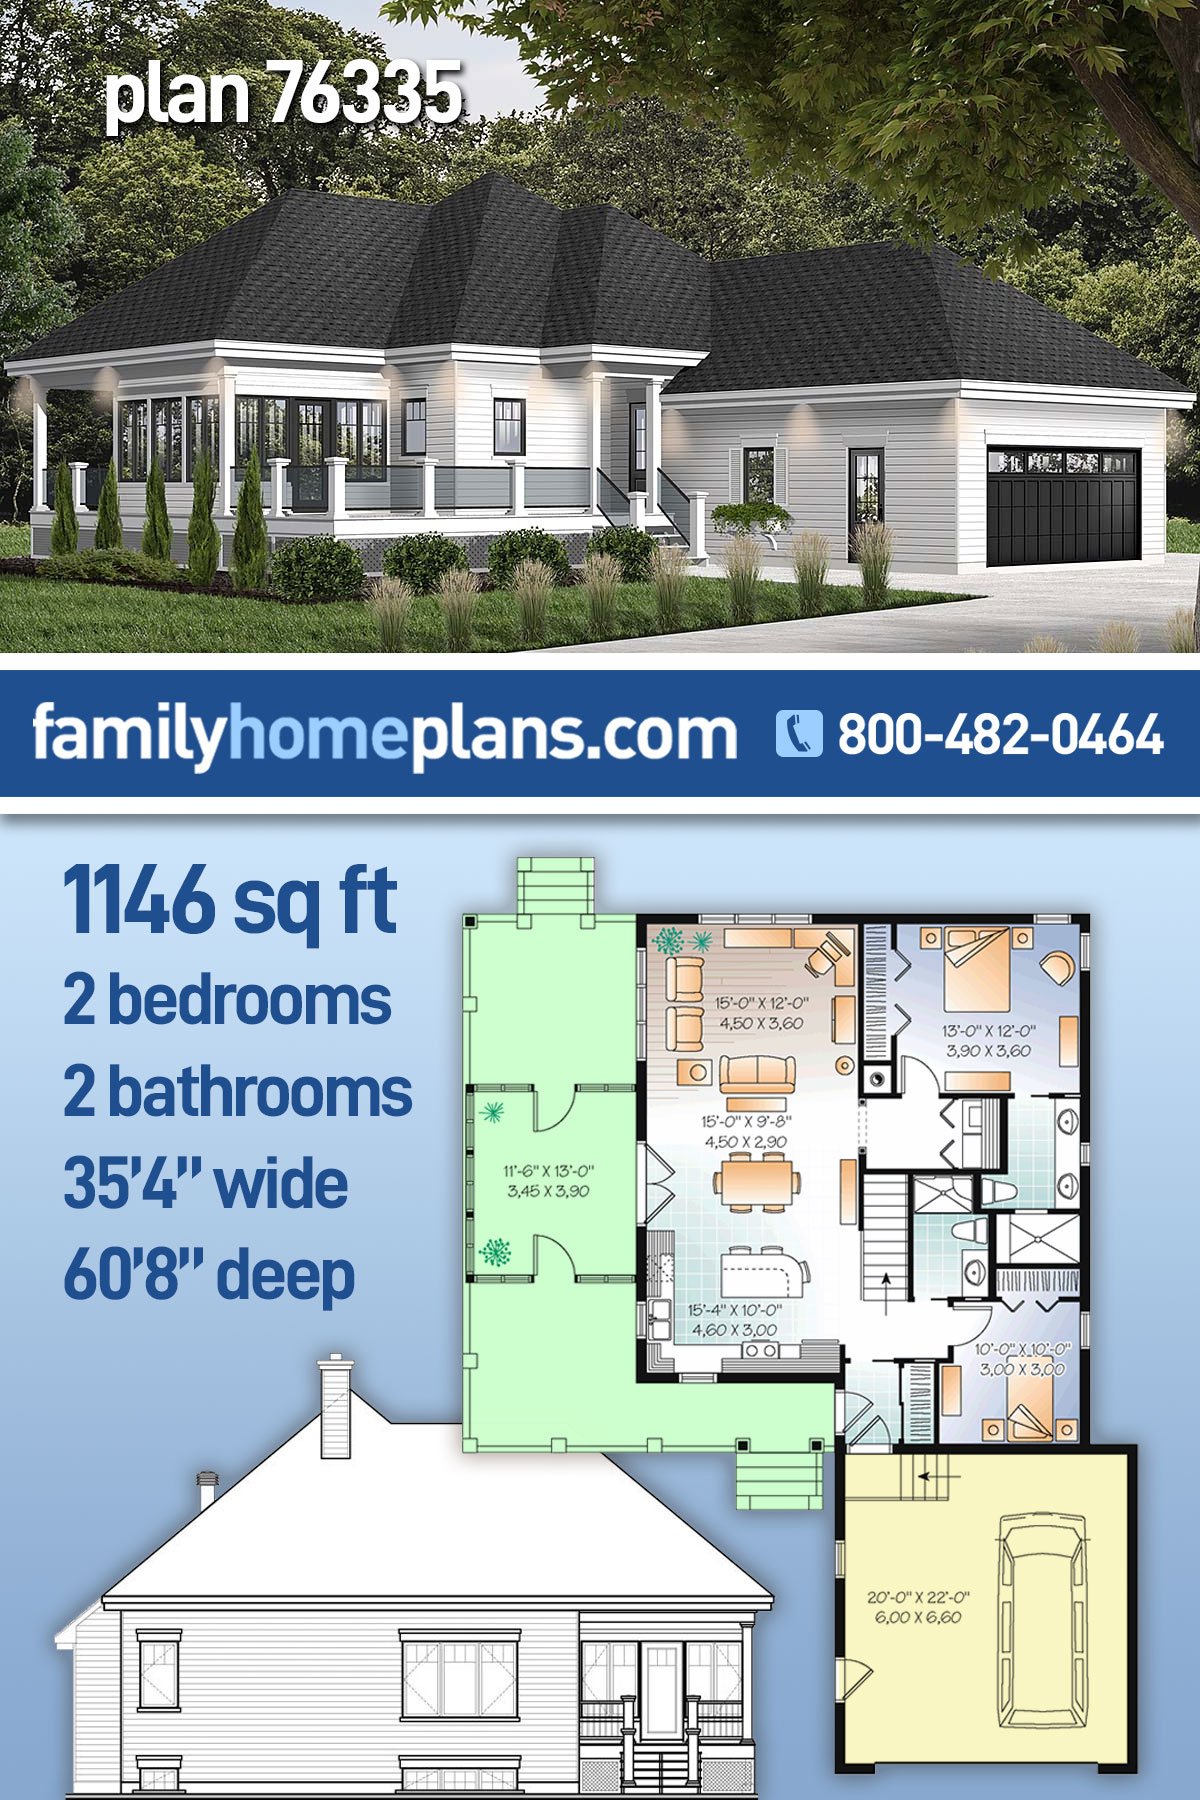 House Plan 76335